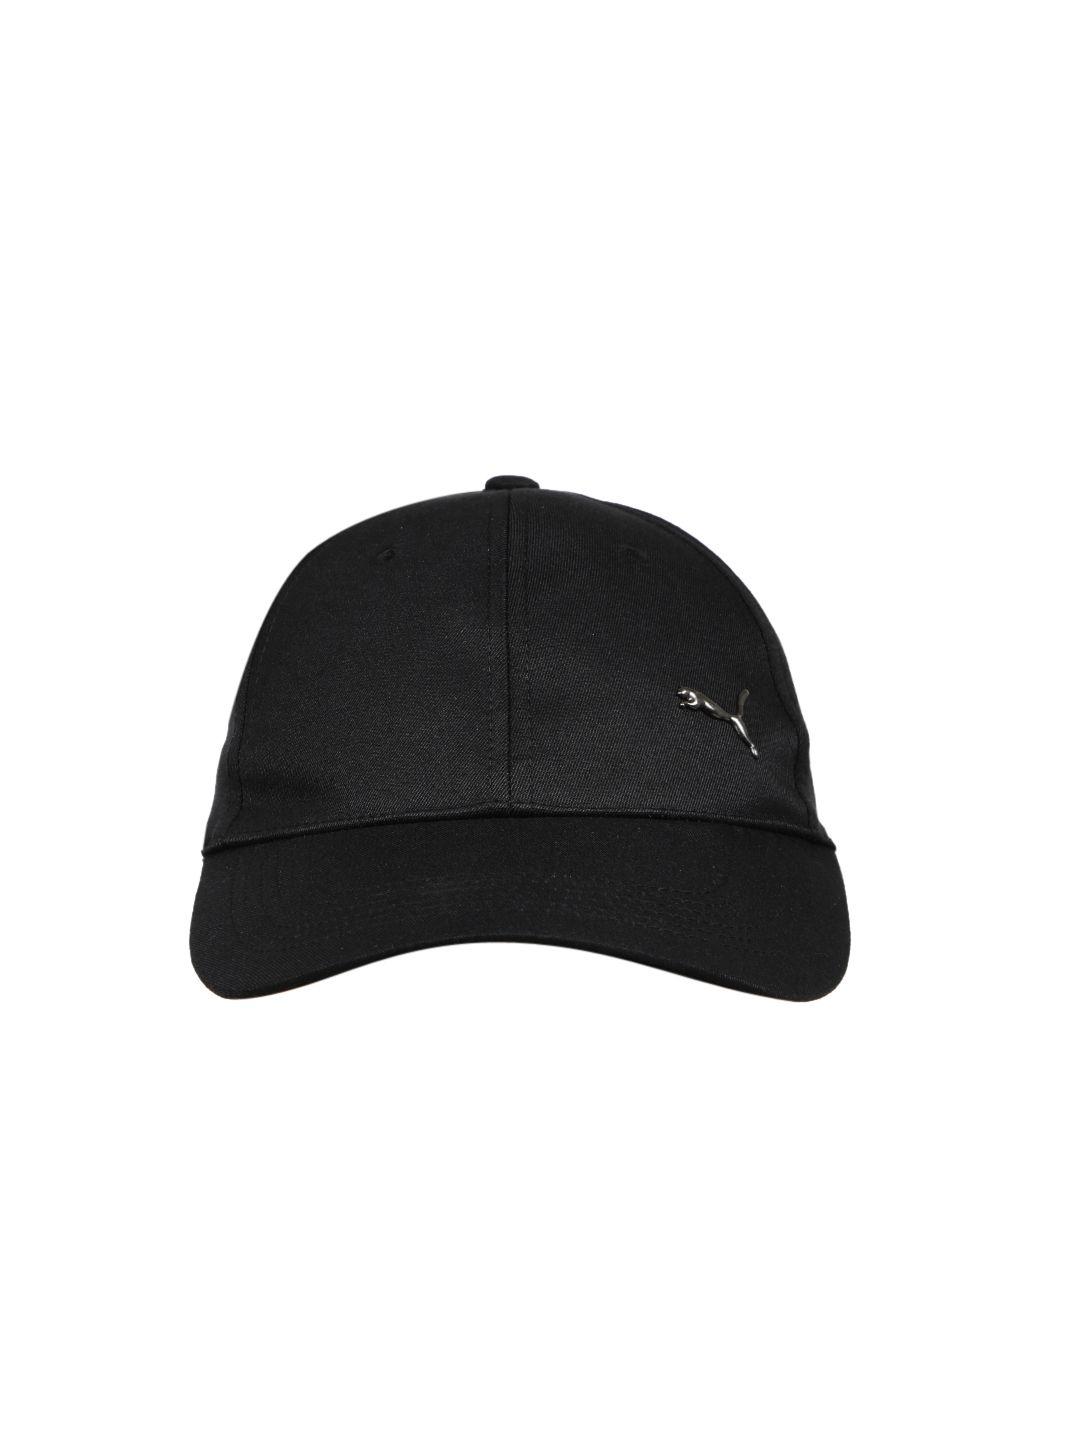 puma unisex black solid metal cat baseball cap